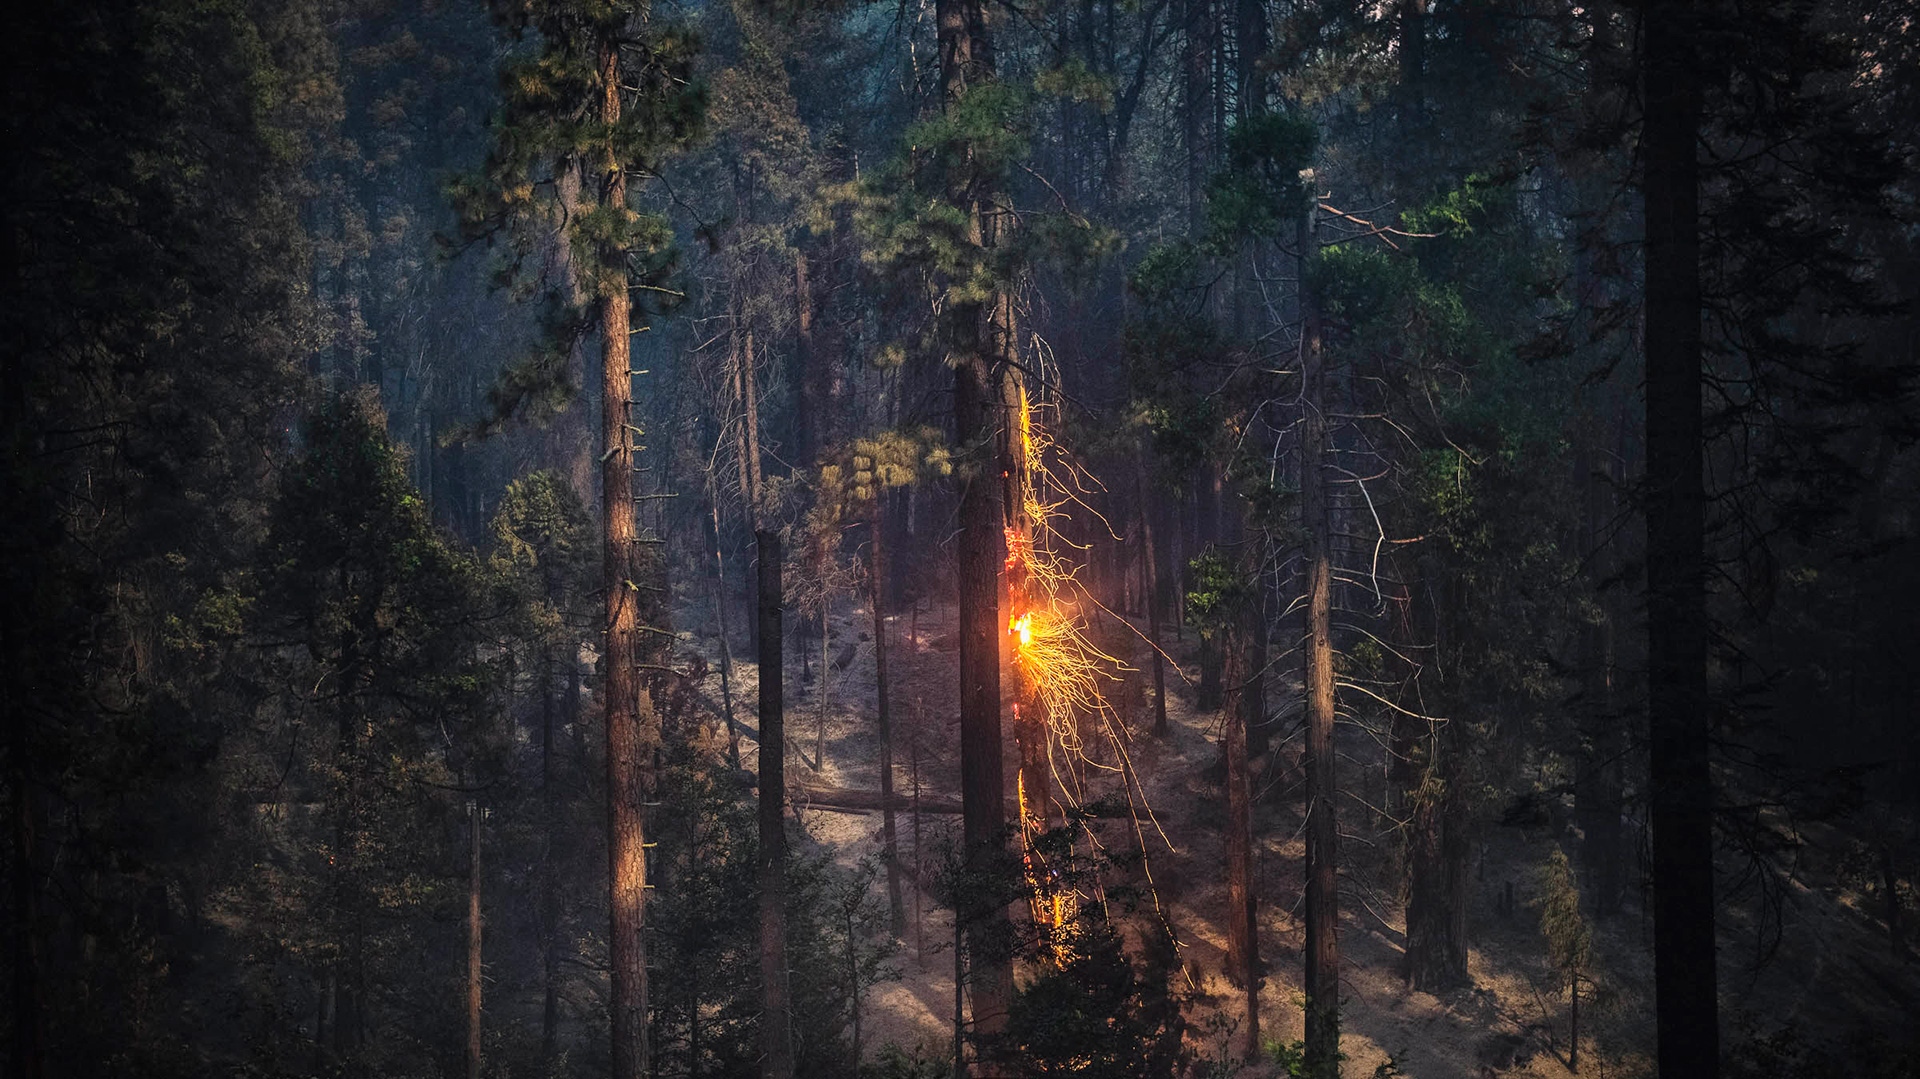 Photo of a single tree on fire.